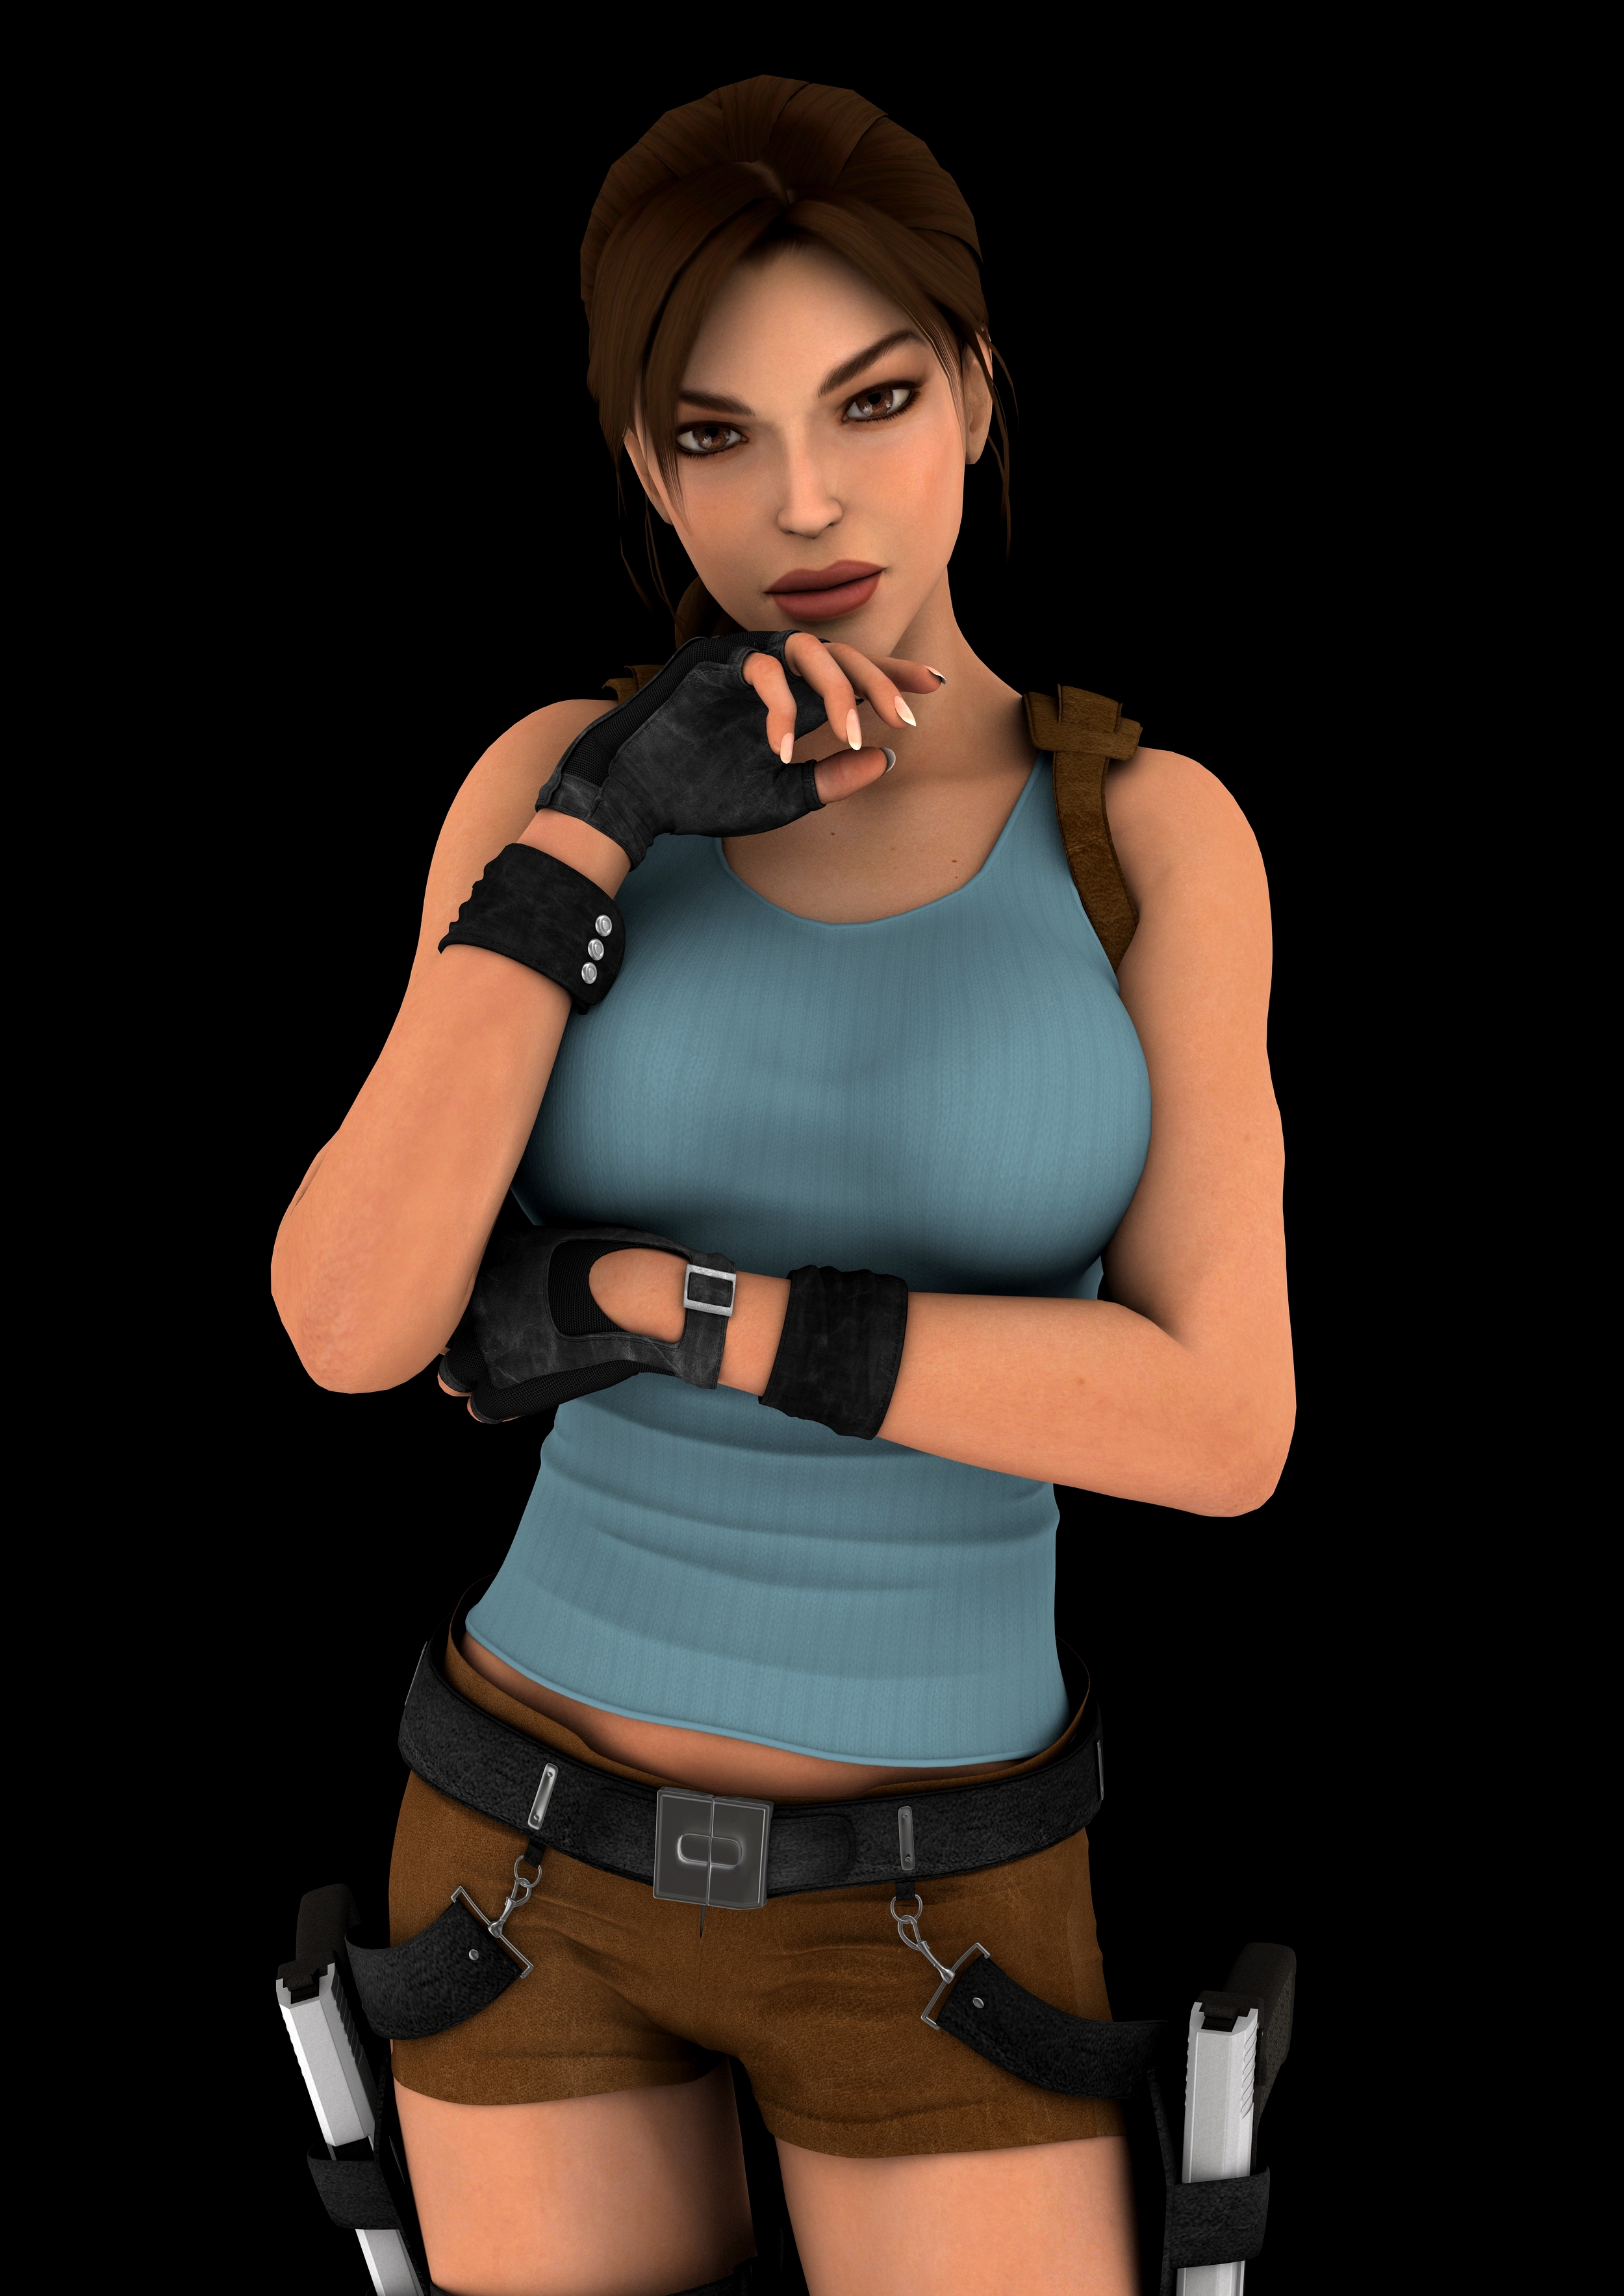 3D вид (3д), Tomb Raider, Лара Крофт - обои на рабочий стол